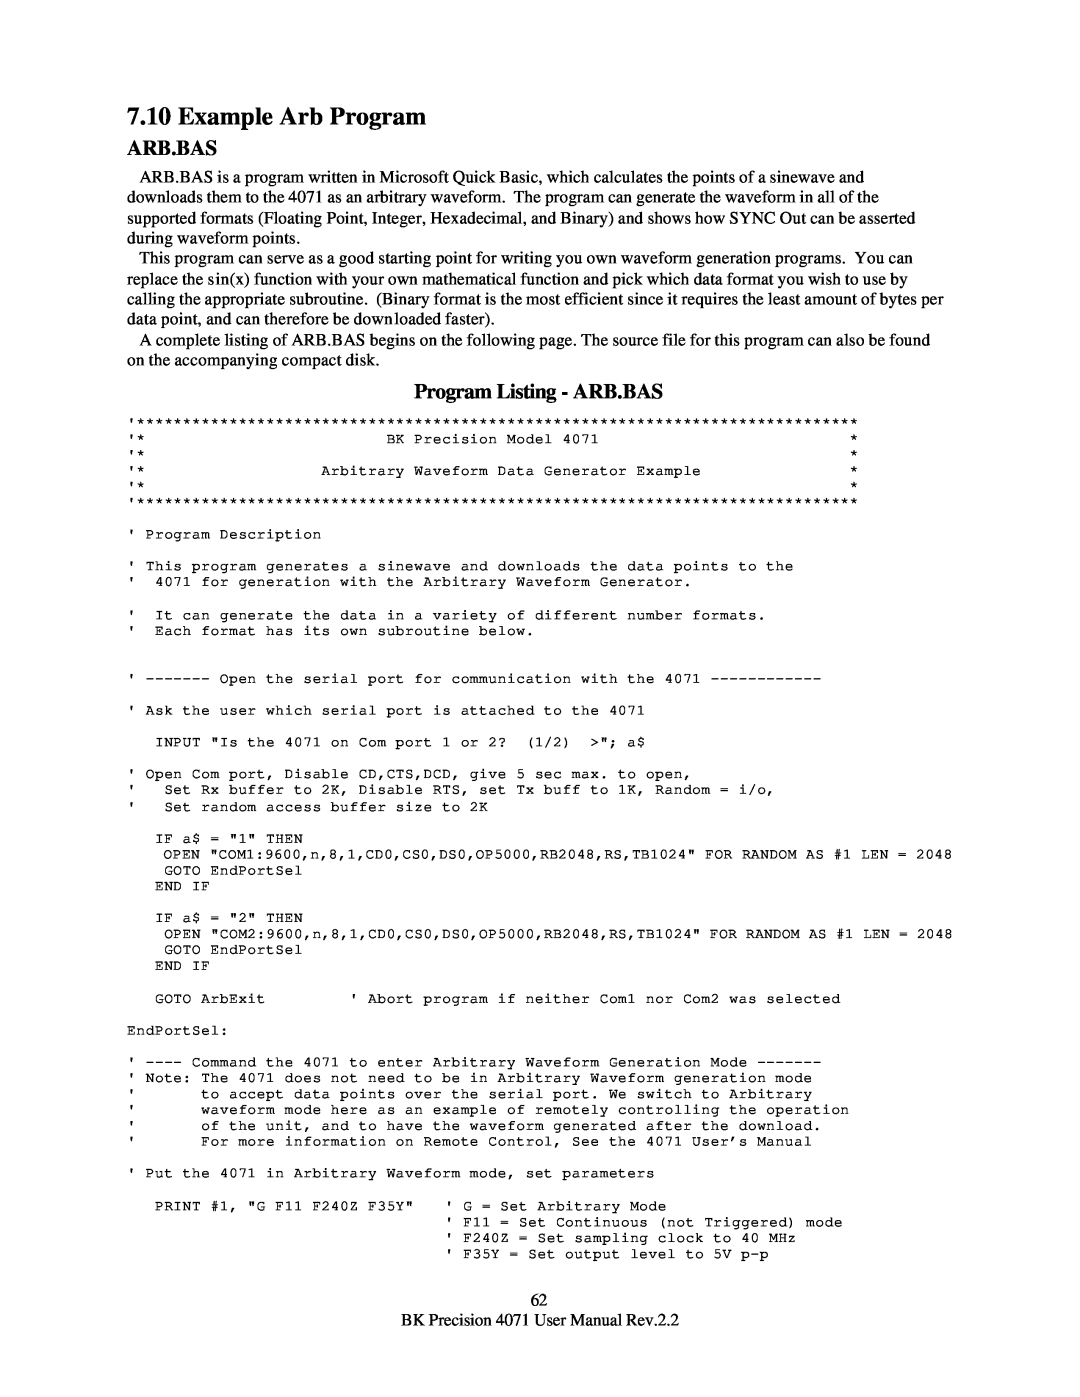 B&K 4071 user manual Example Arb Program, Arb.Bas, Program Listing - ARB.BAS 